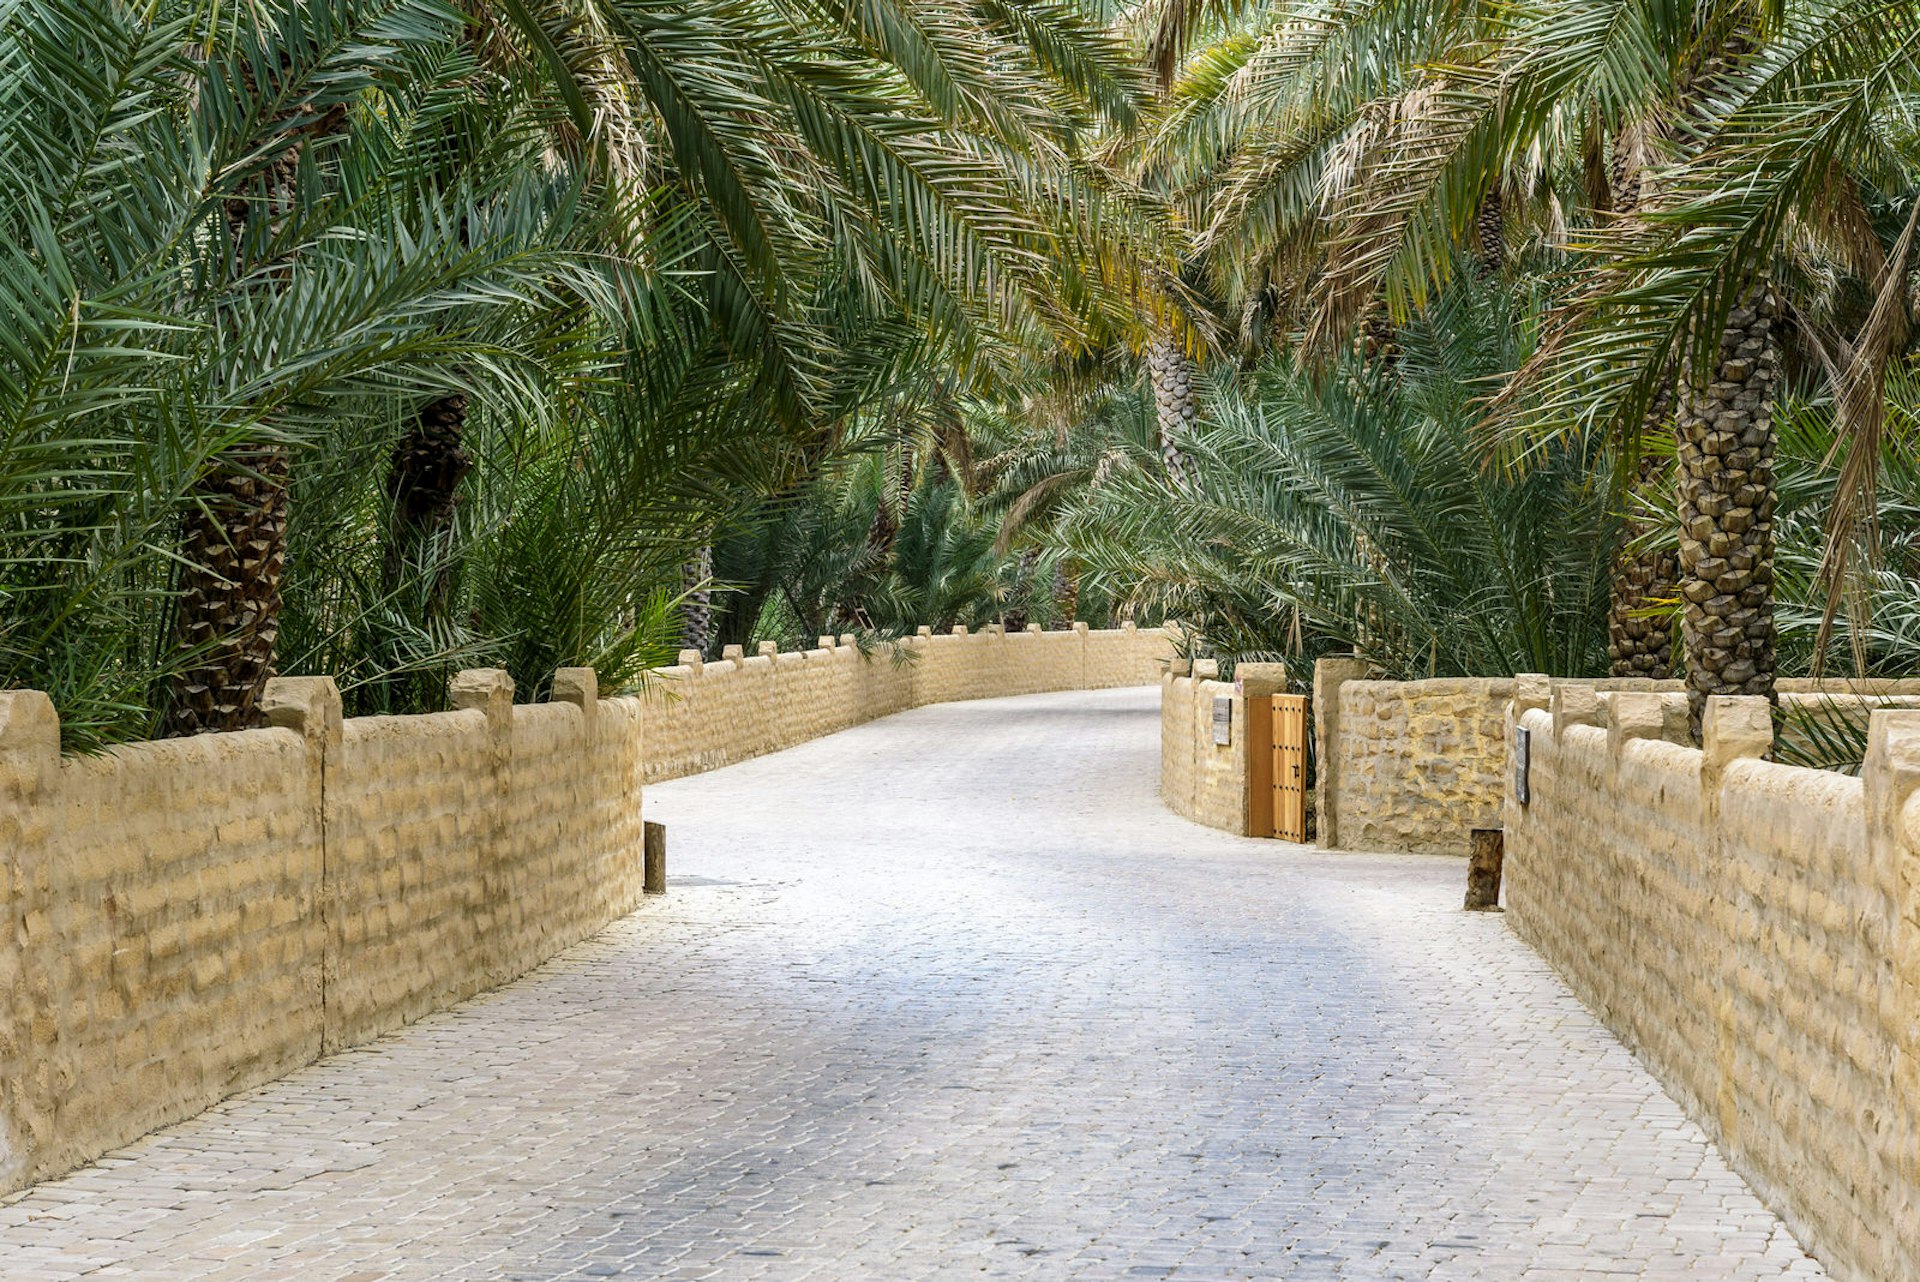 Features - Al Ain oasis